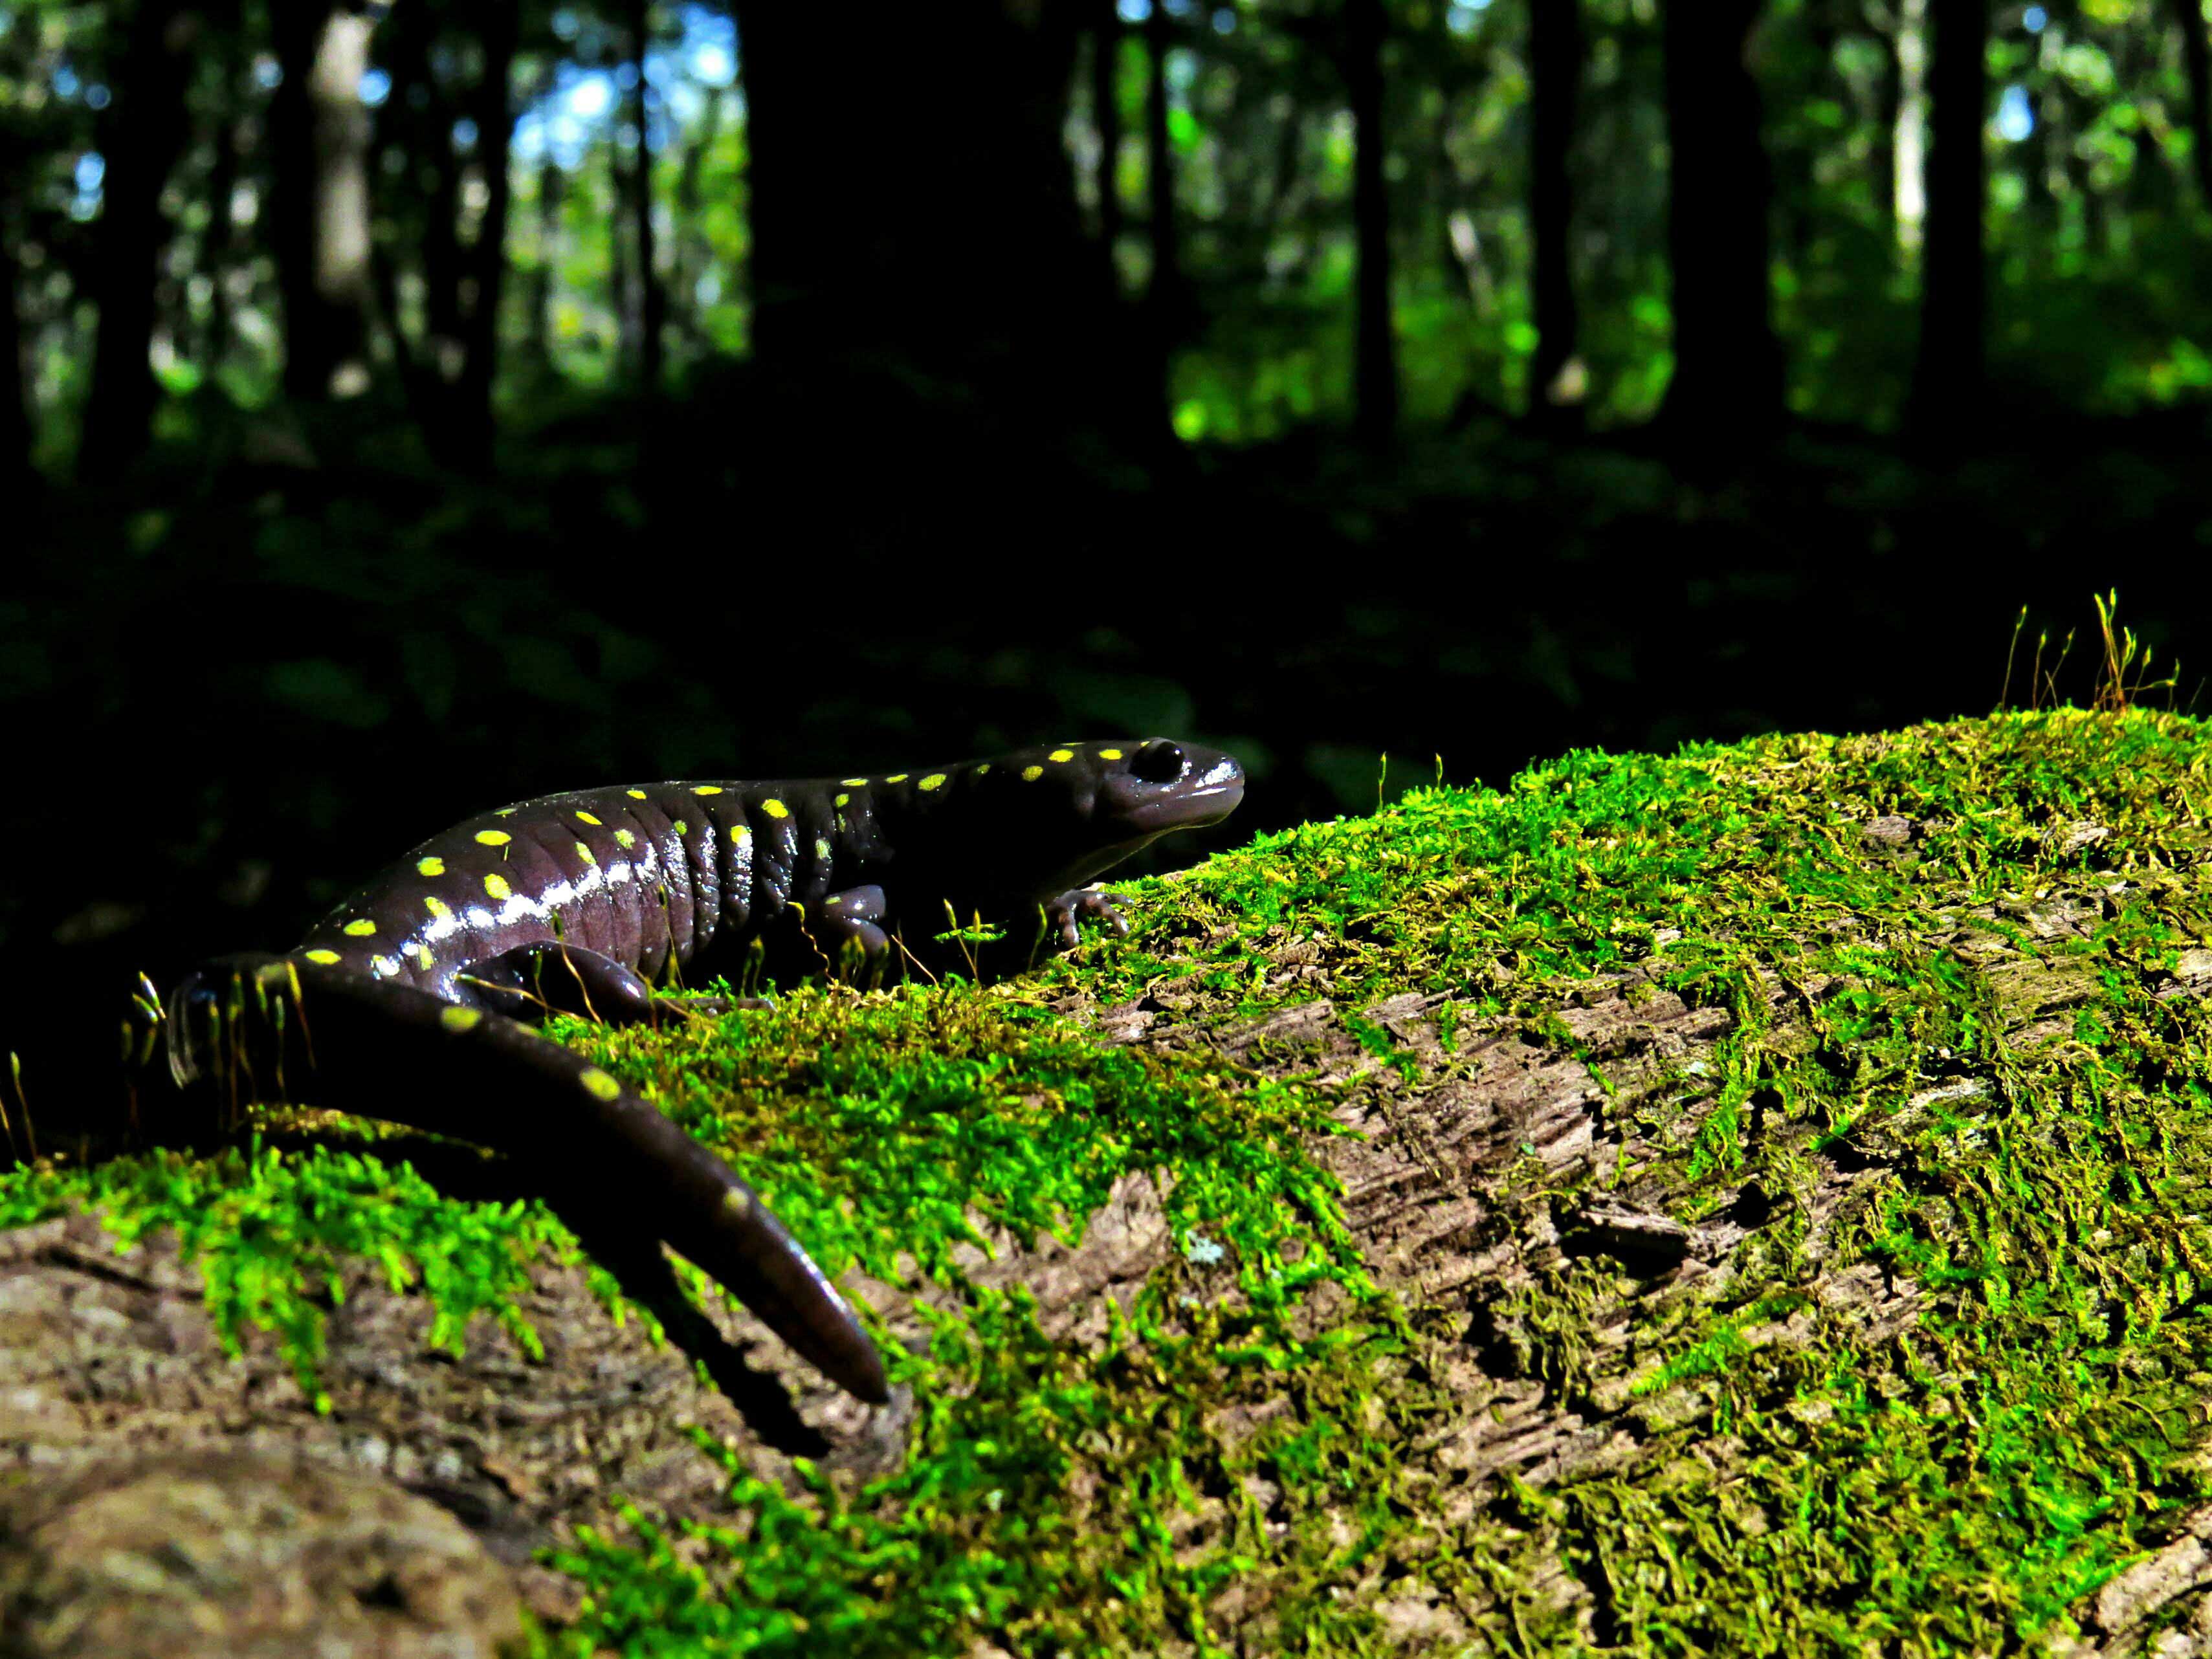 A blue-spotted salamander.